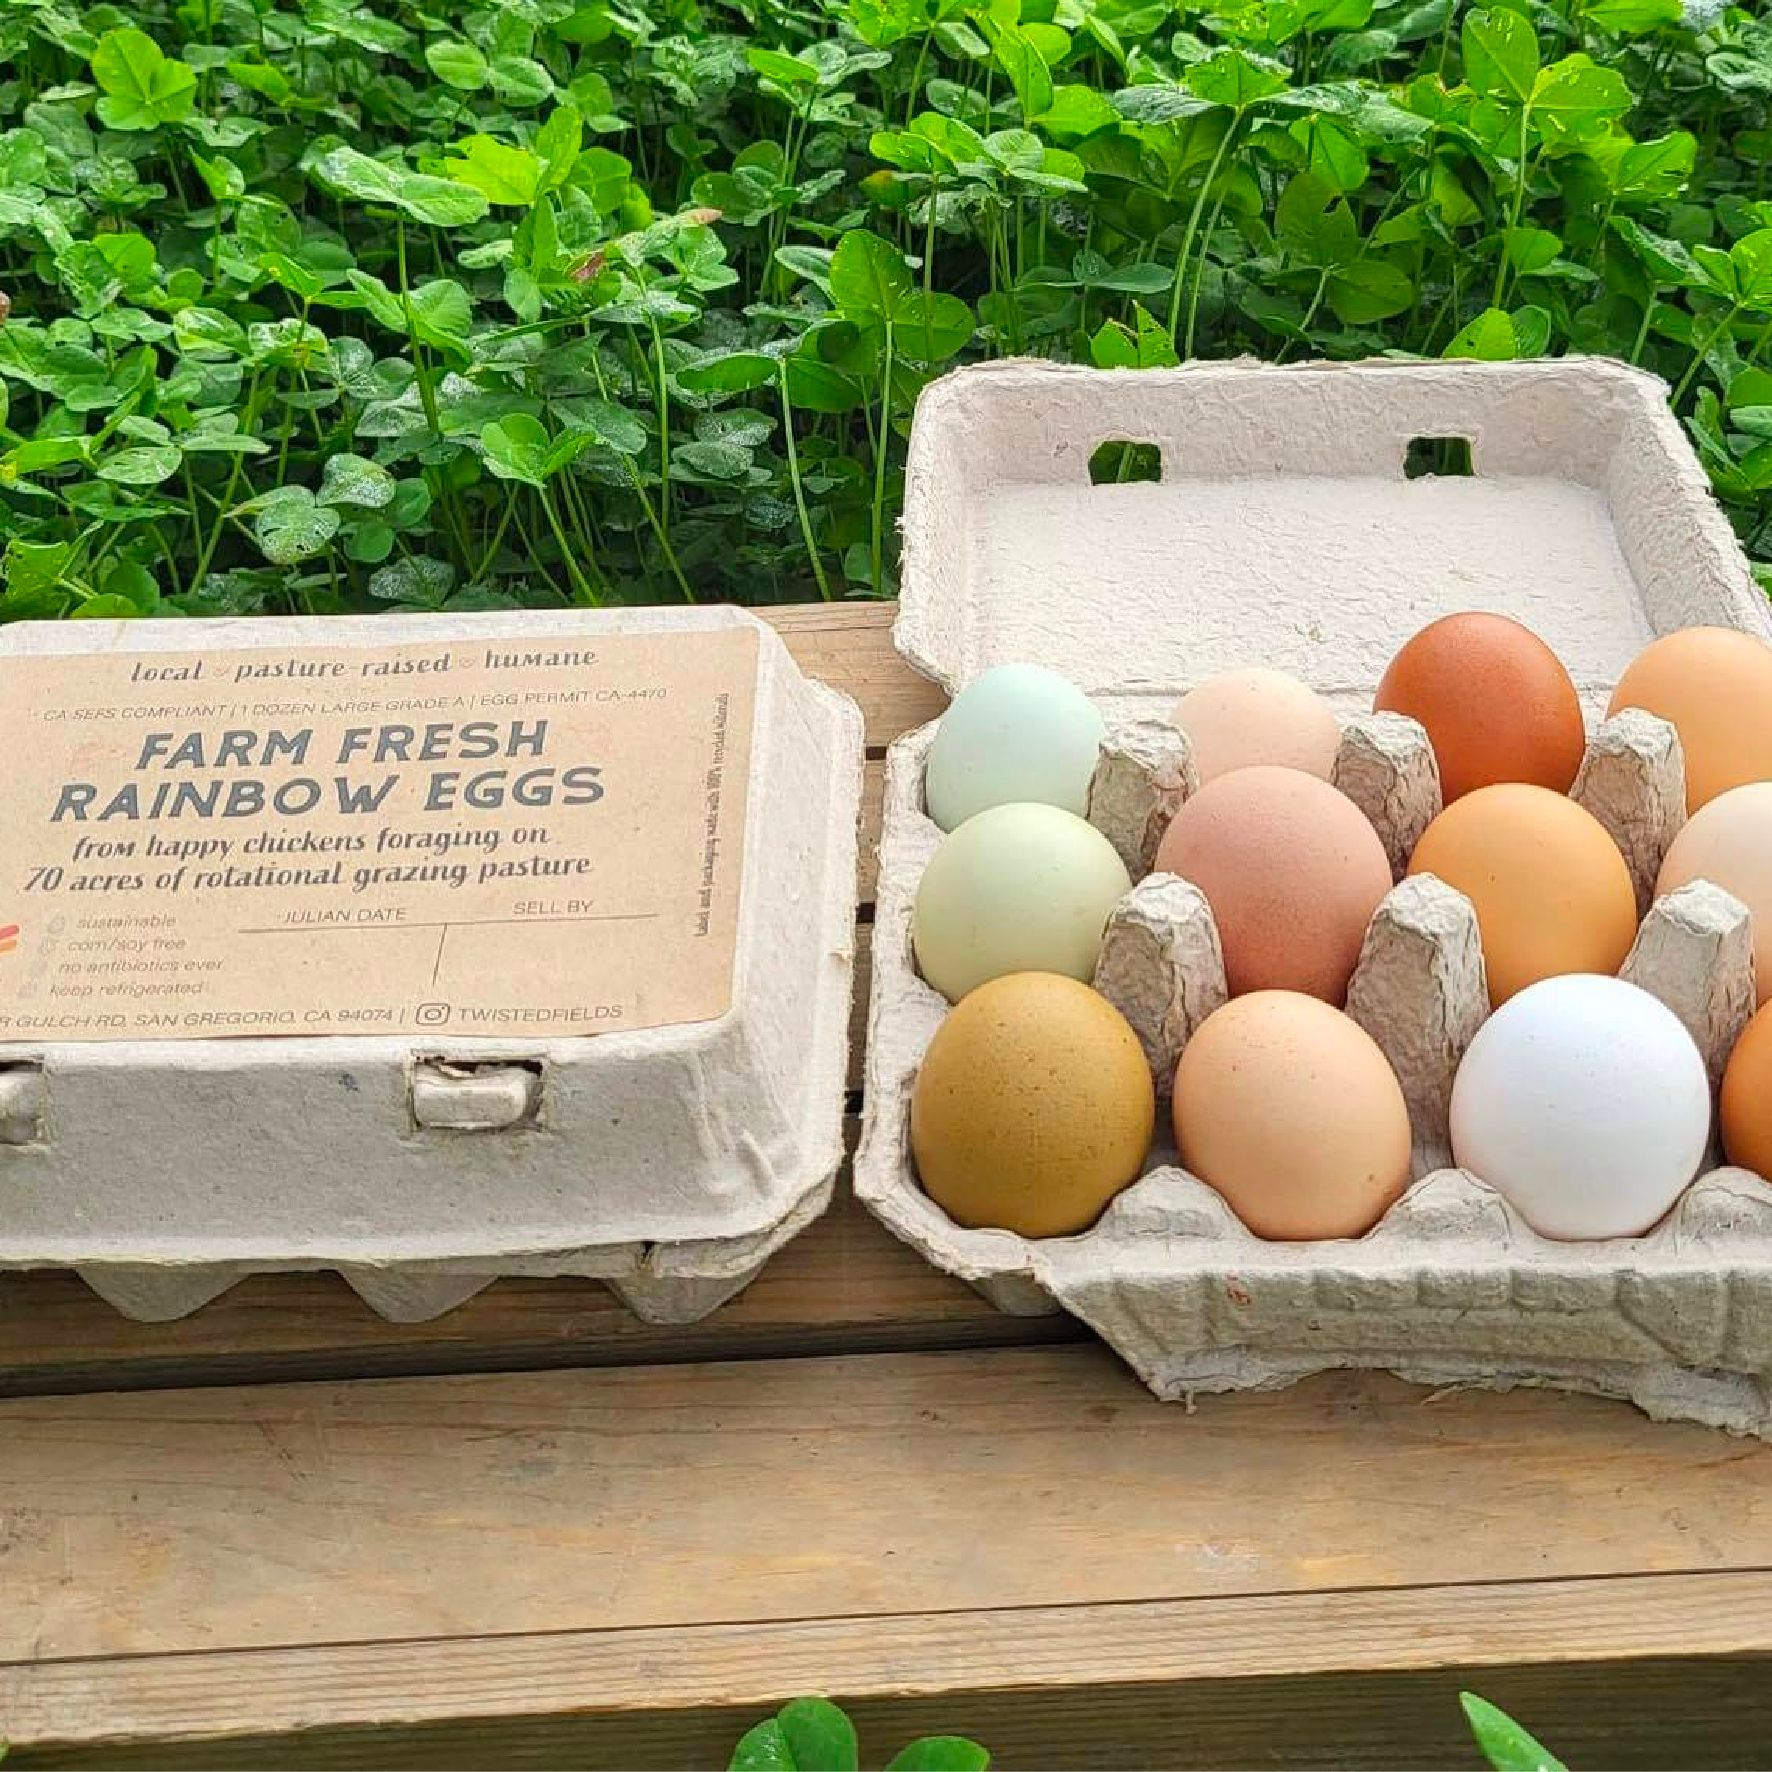 Organic Pasture Raised Eggs (Large), 1 dozen, Vital Farms